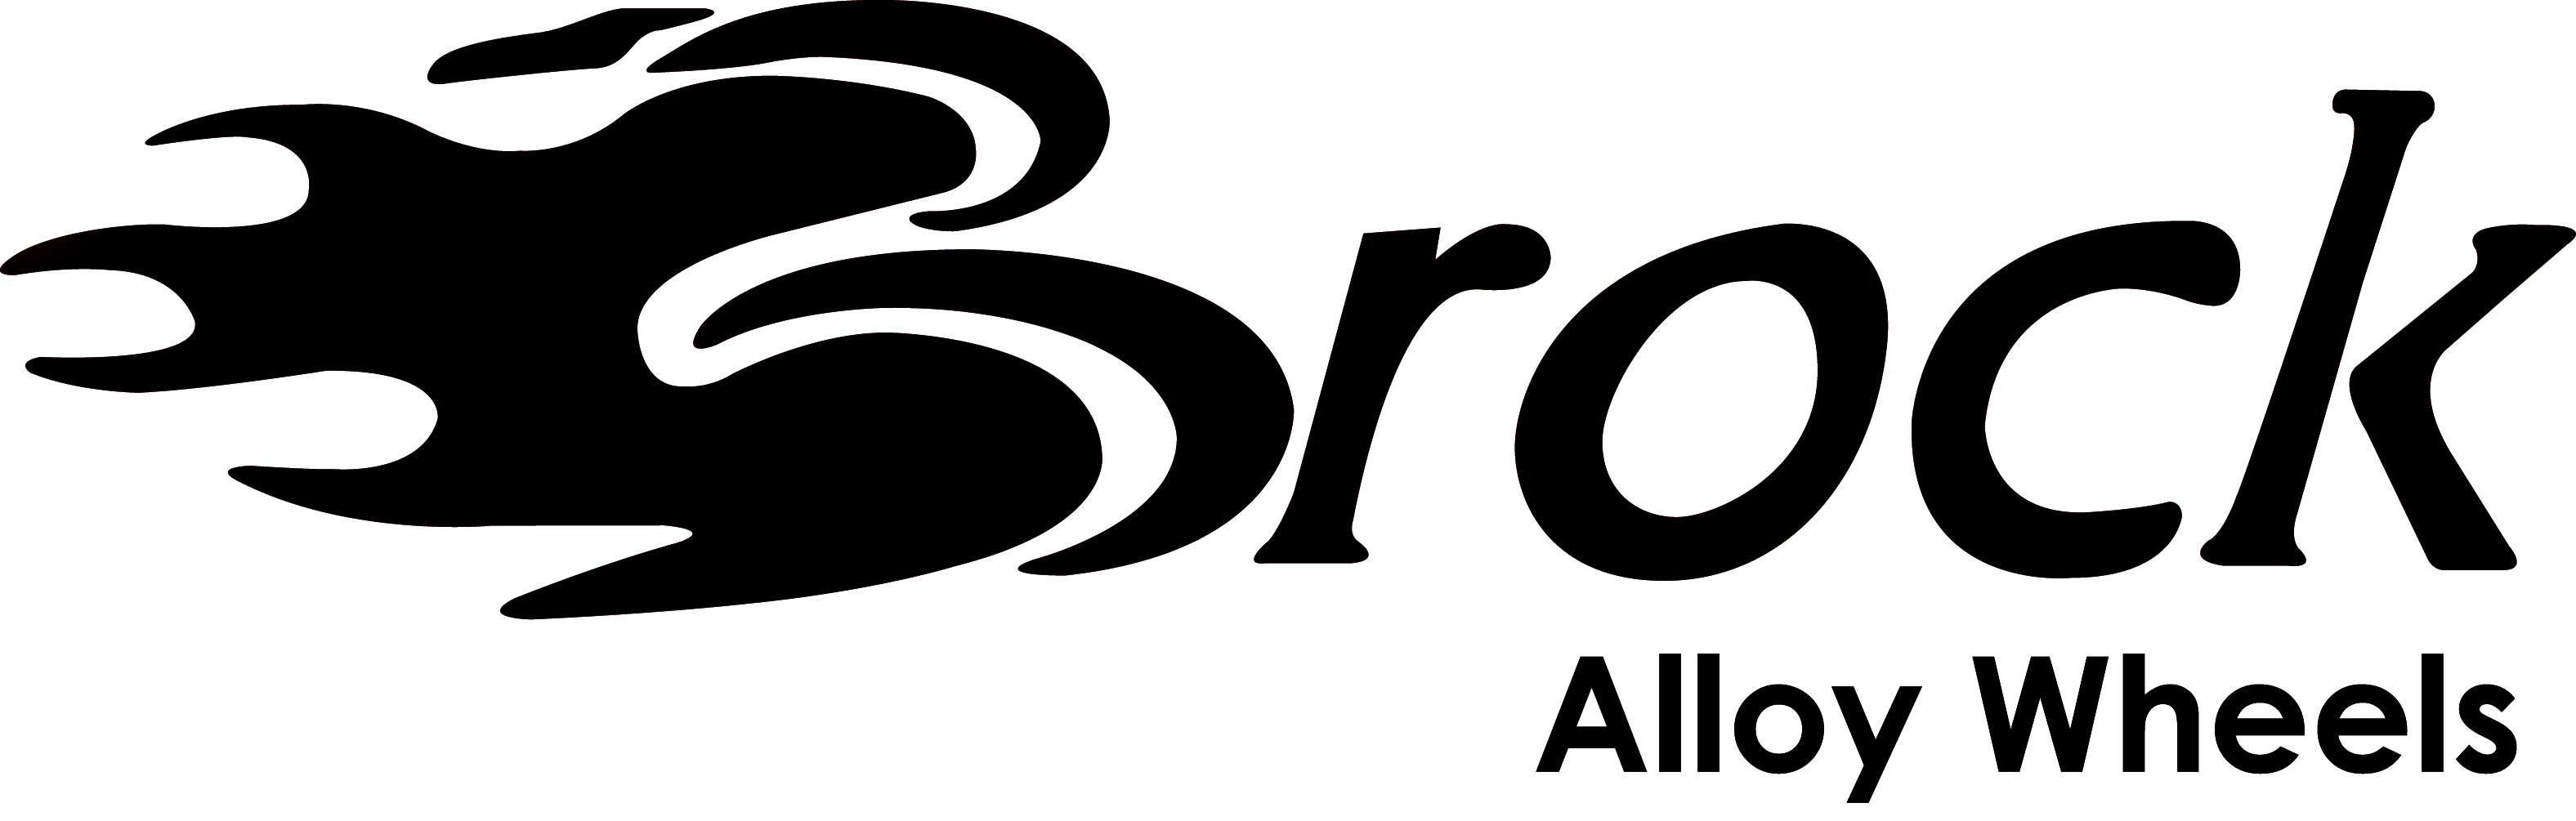 Brock logotyp